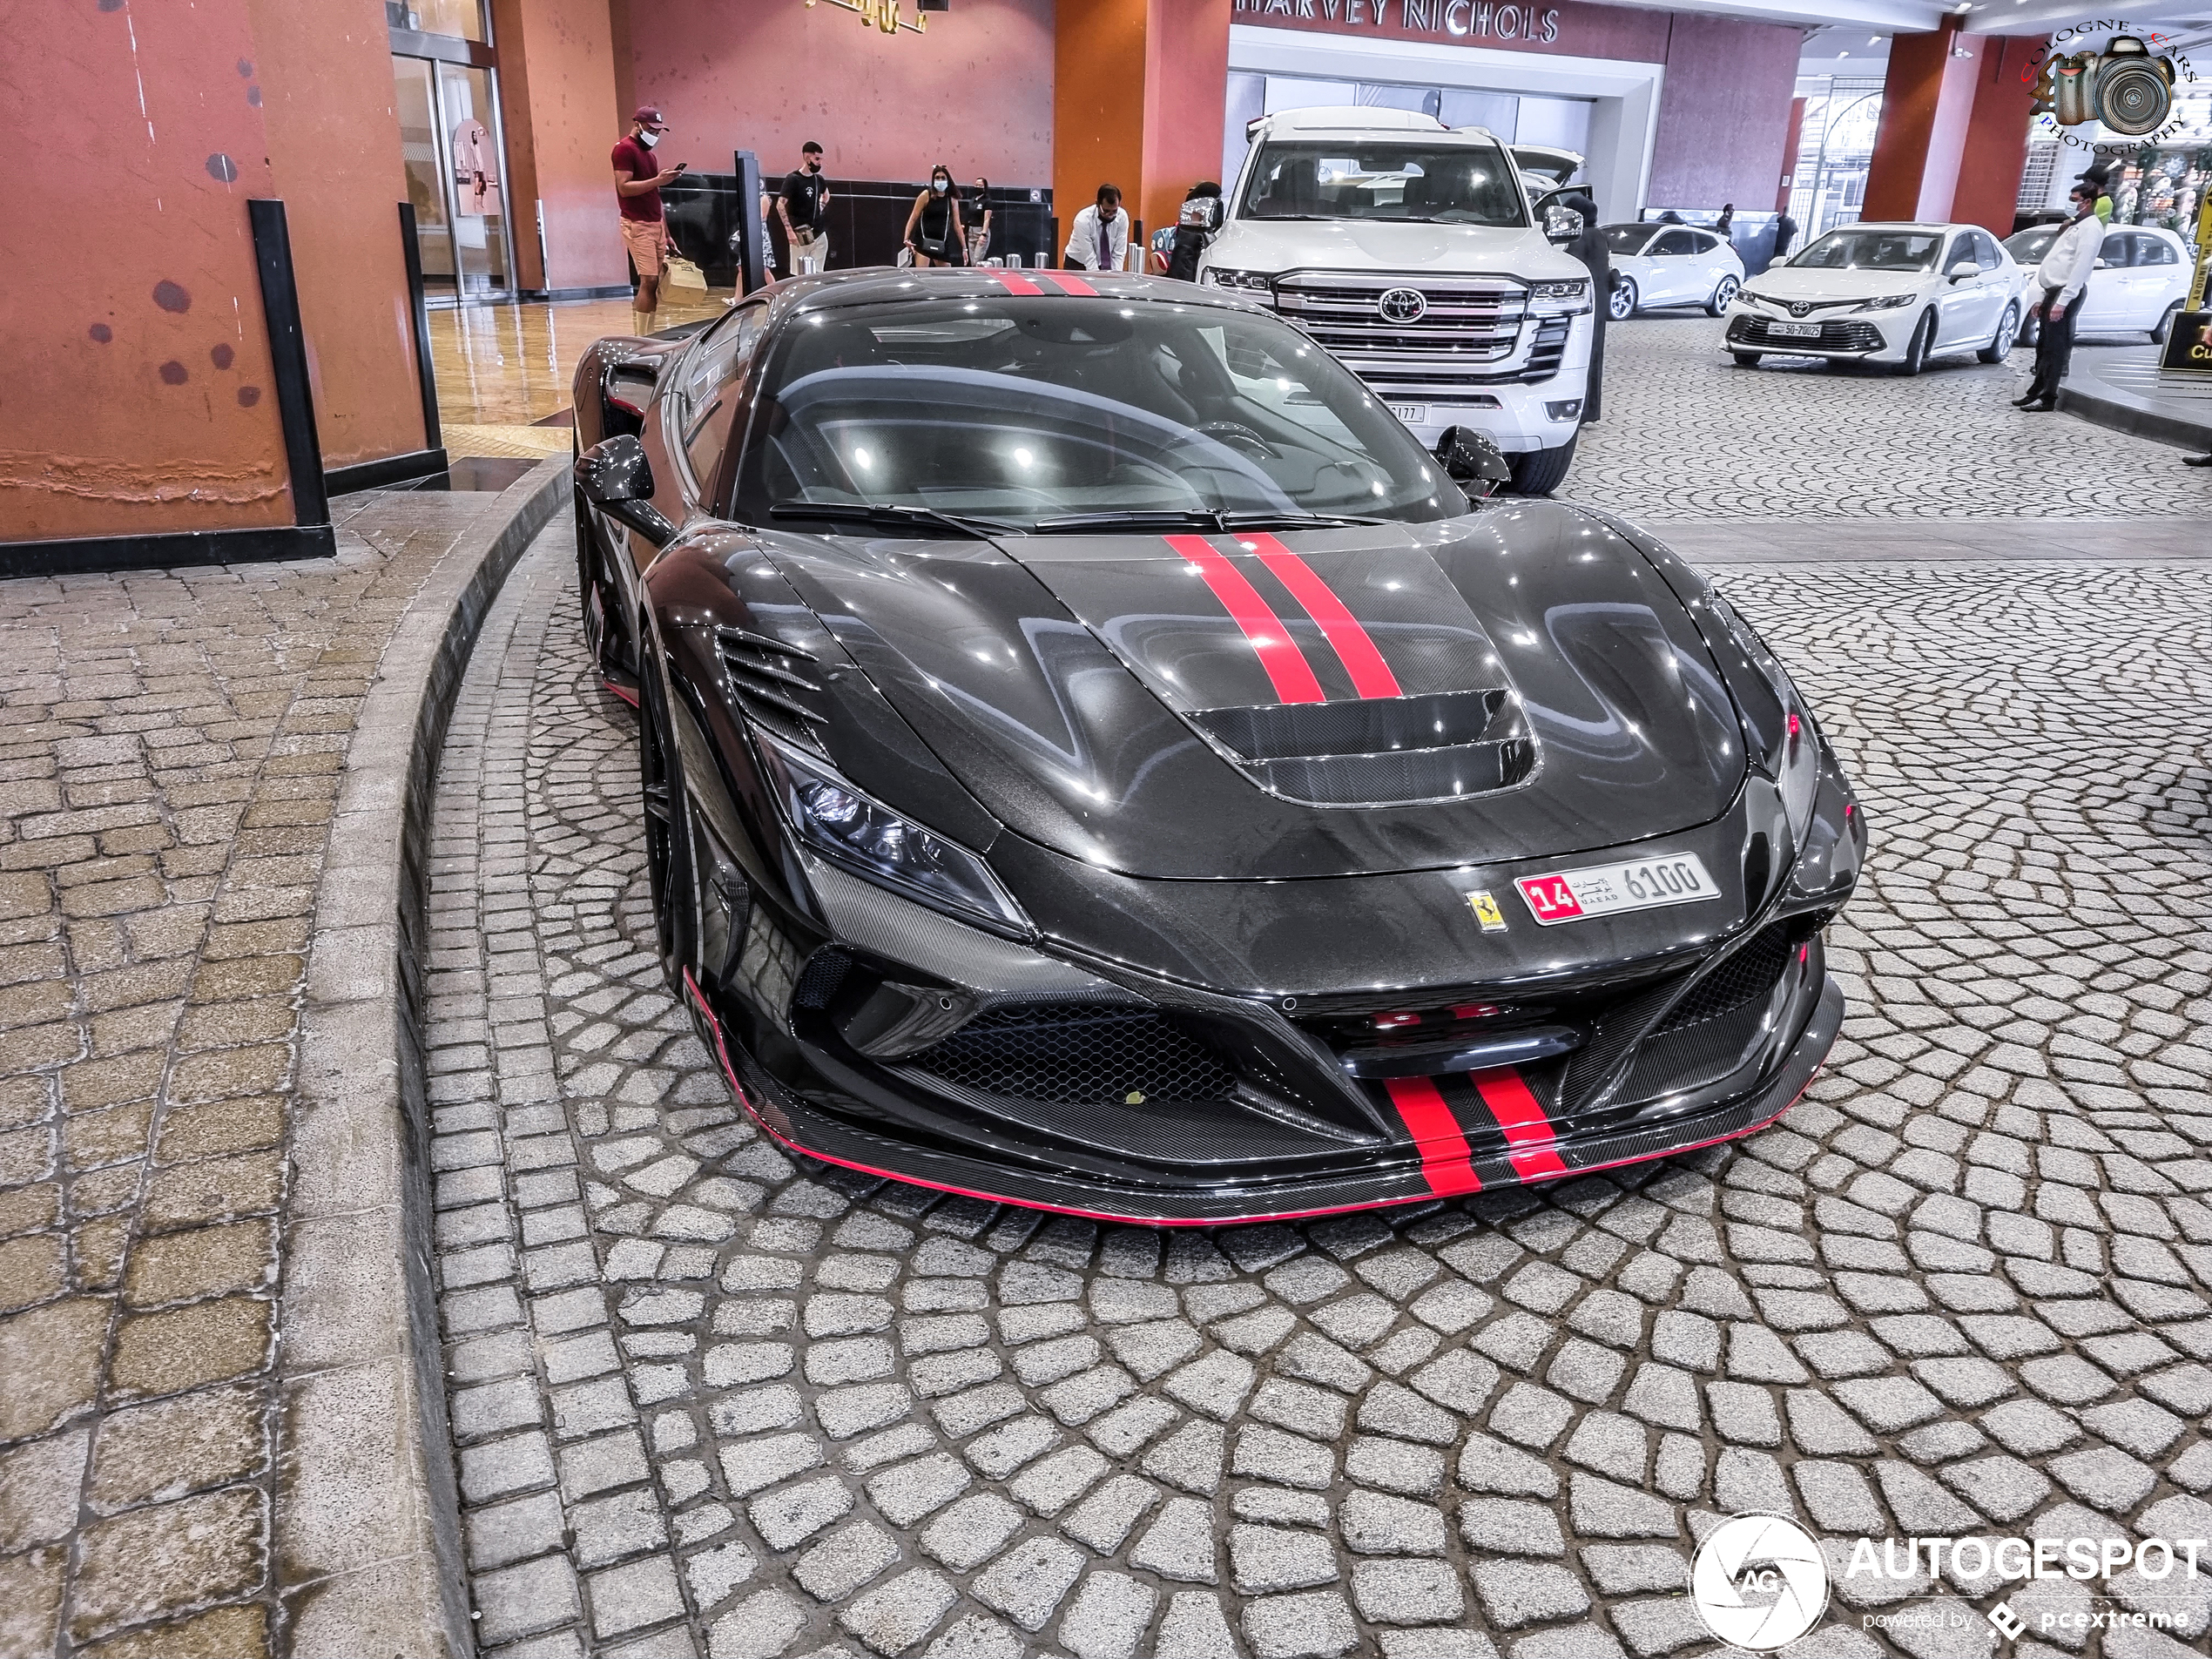 Spotten in Dubai nog altijd genot: Ferrari Keyvany F8 835 SuperTributo